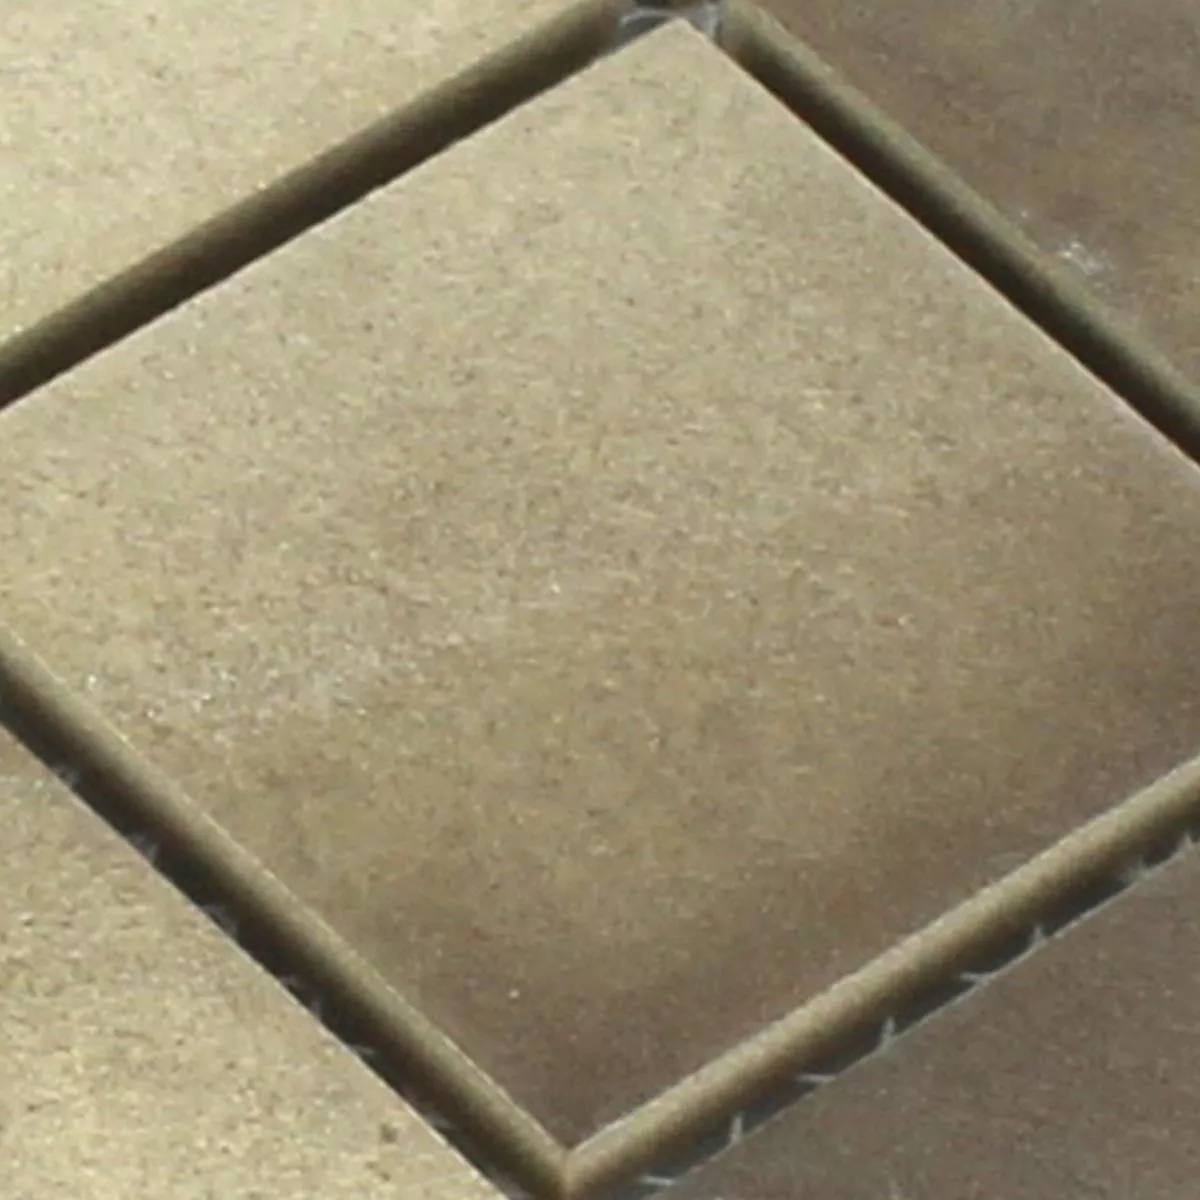 Sample Mosaic Tiles Ceramic Non Slip Beige Brown